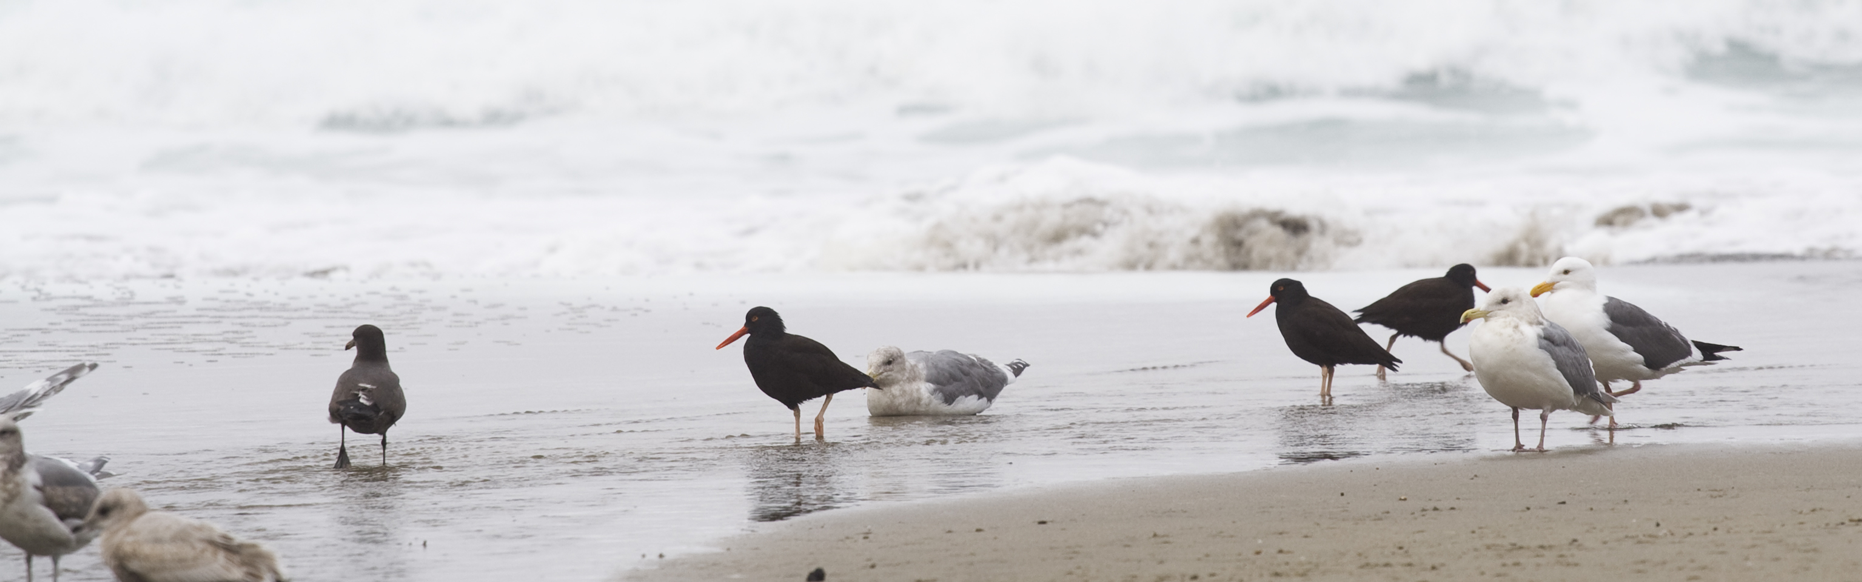 Gulls on shore